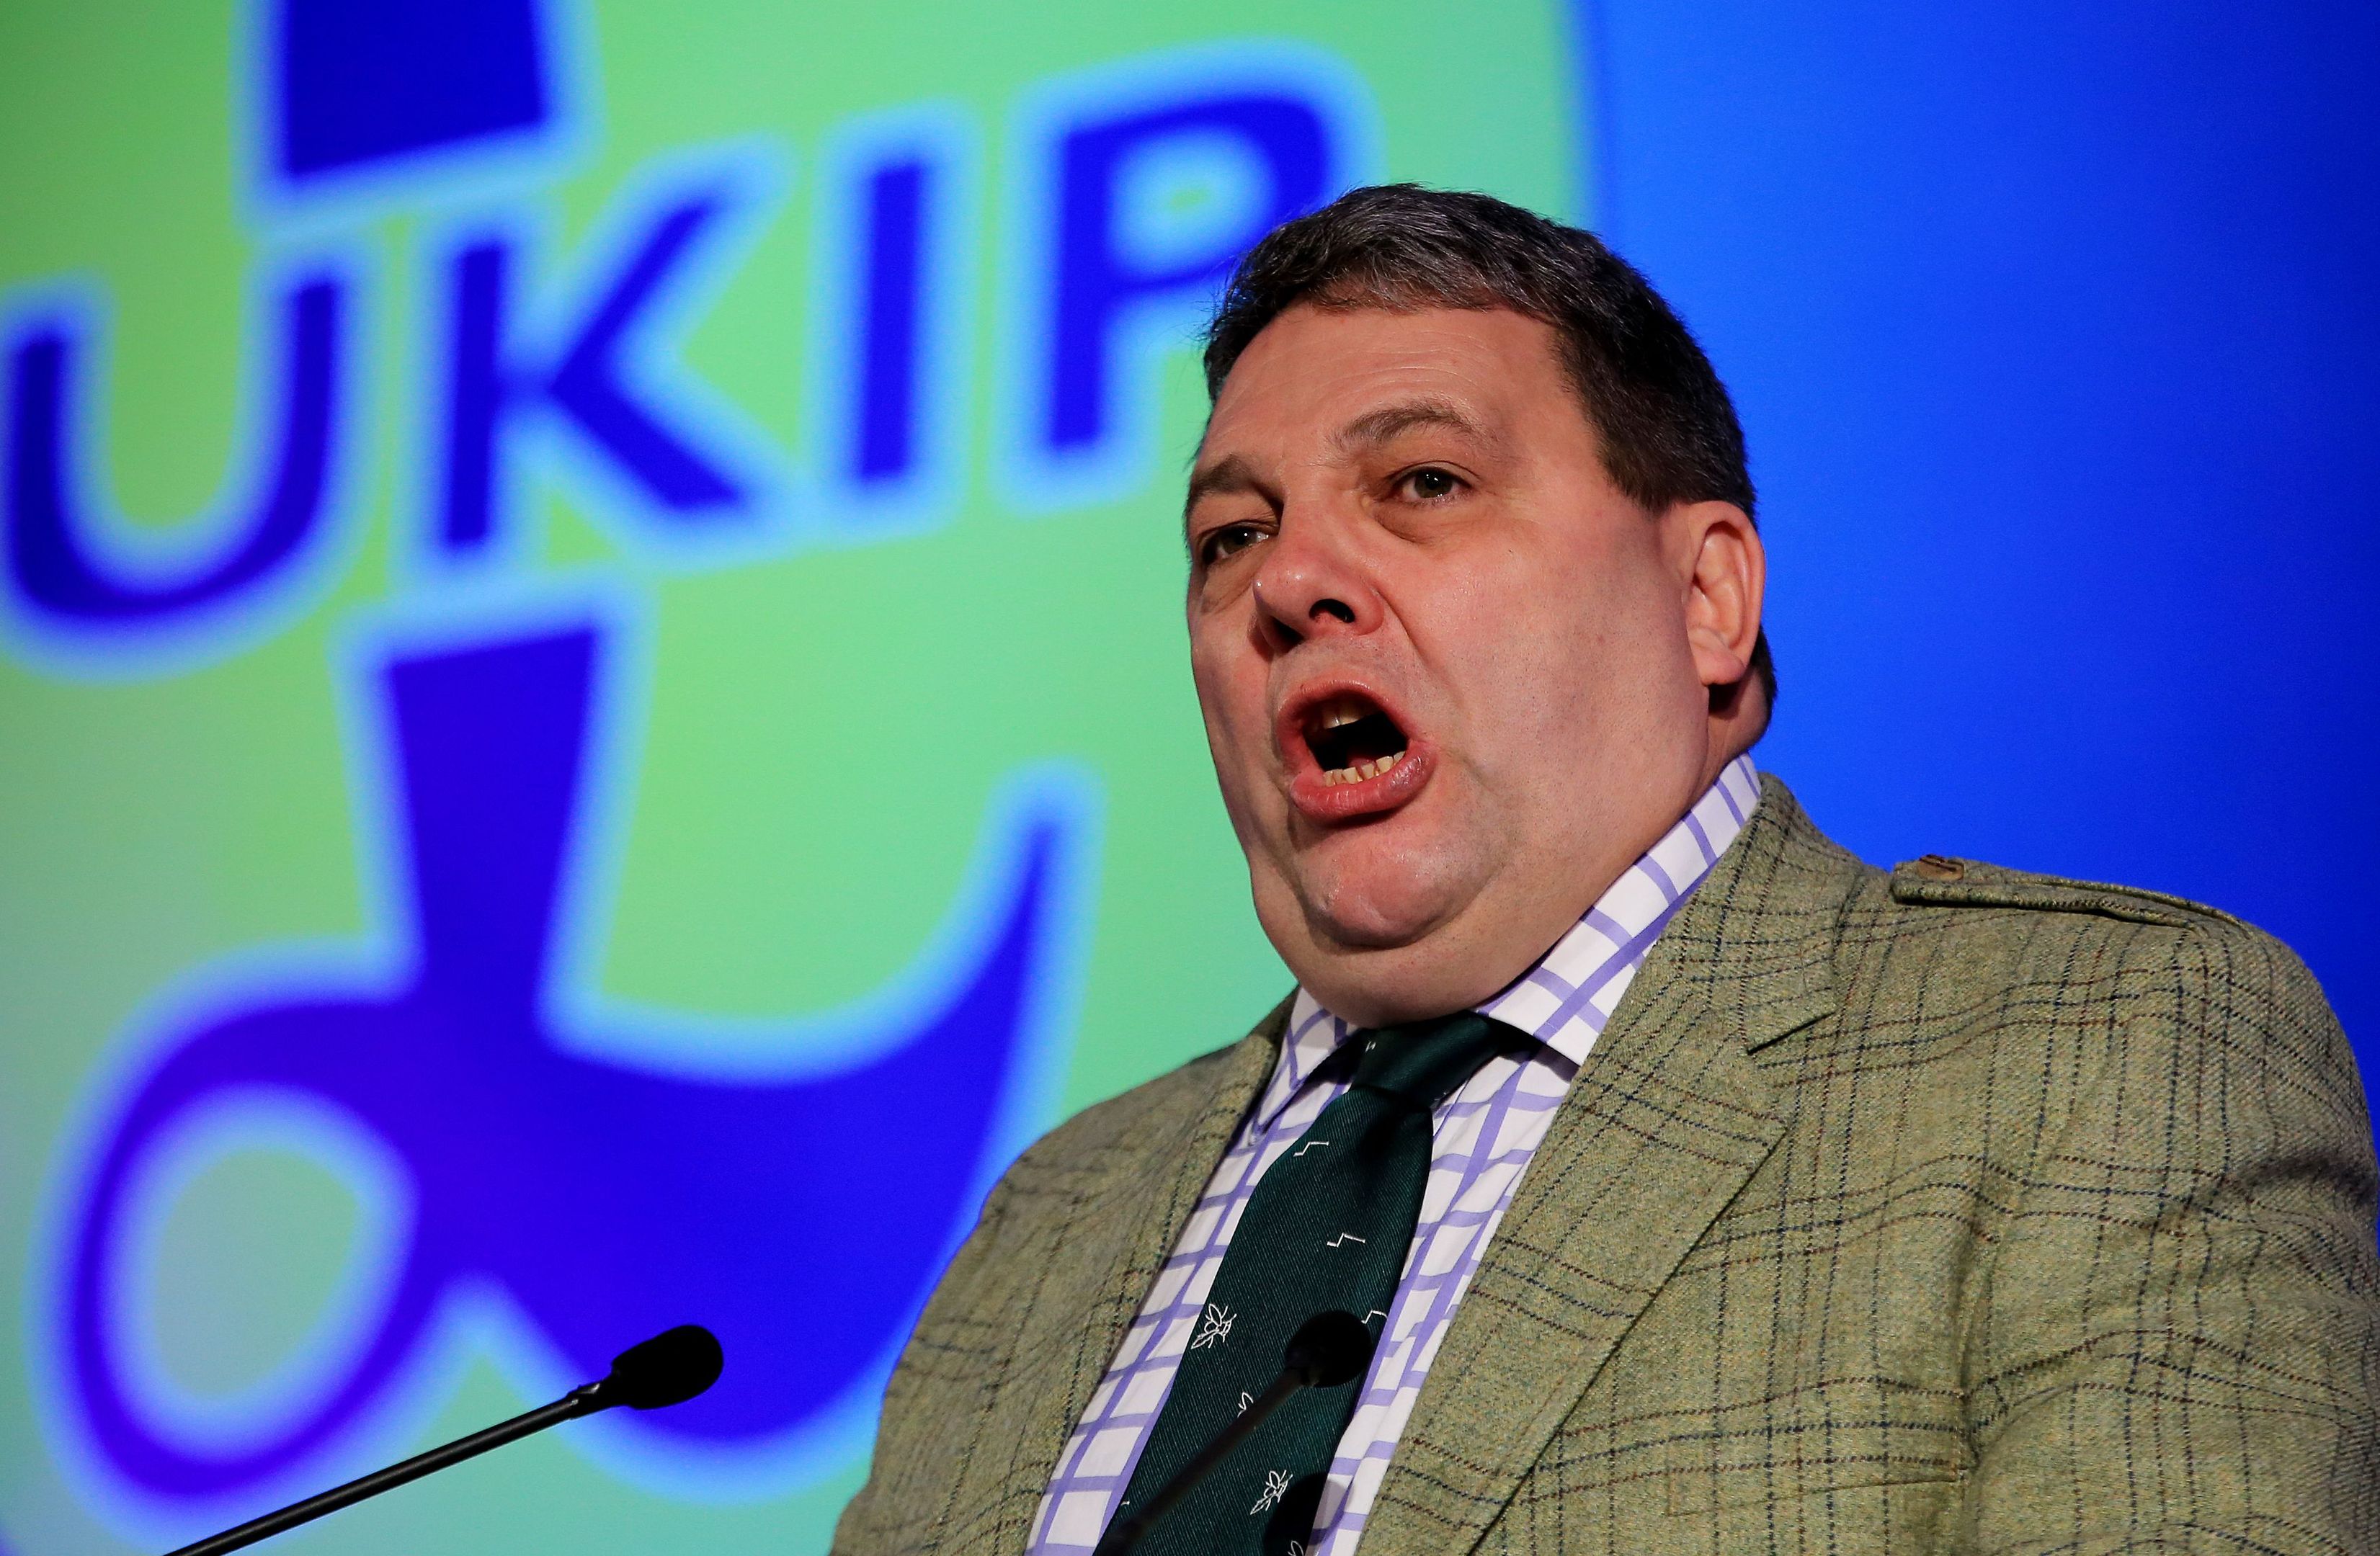 UKIP MEP David Coburn